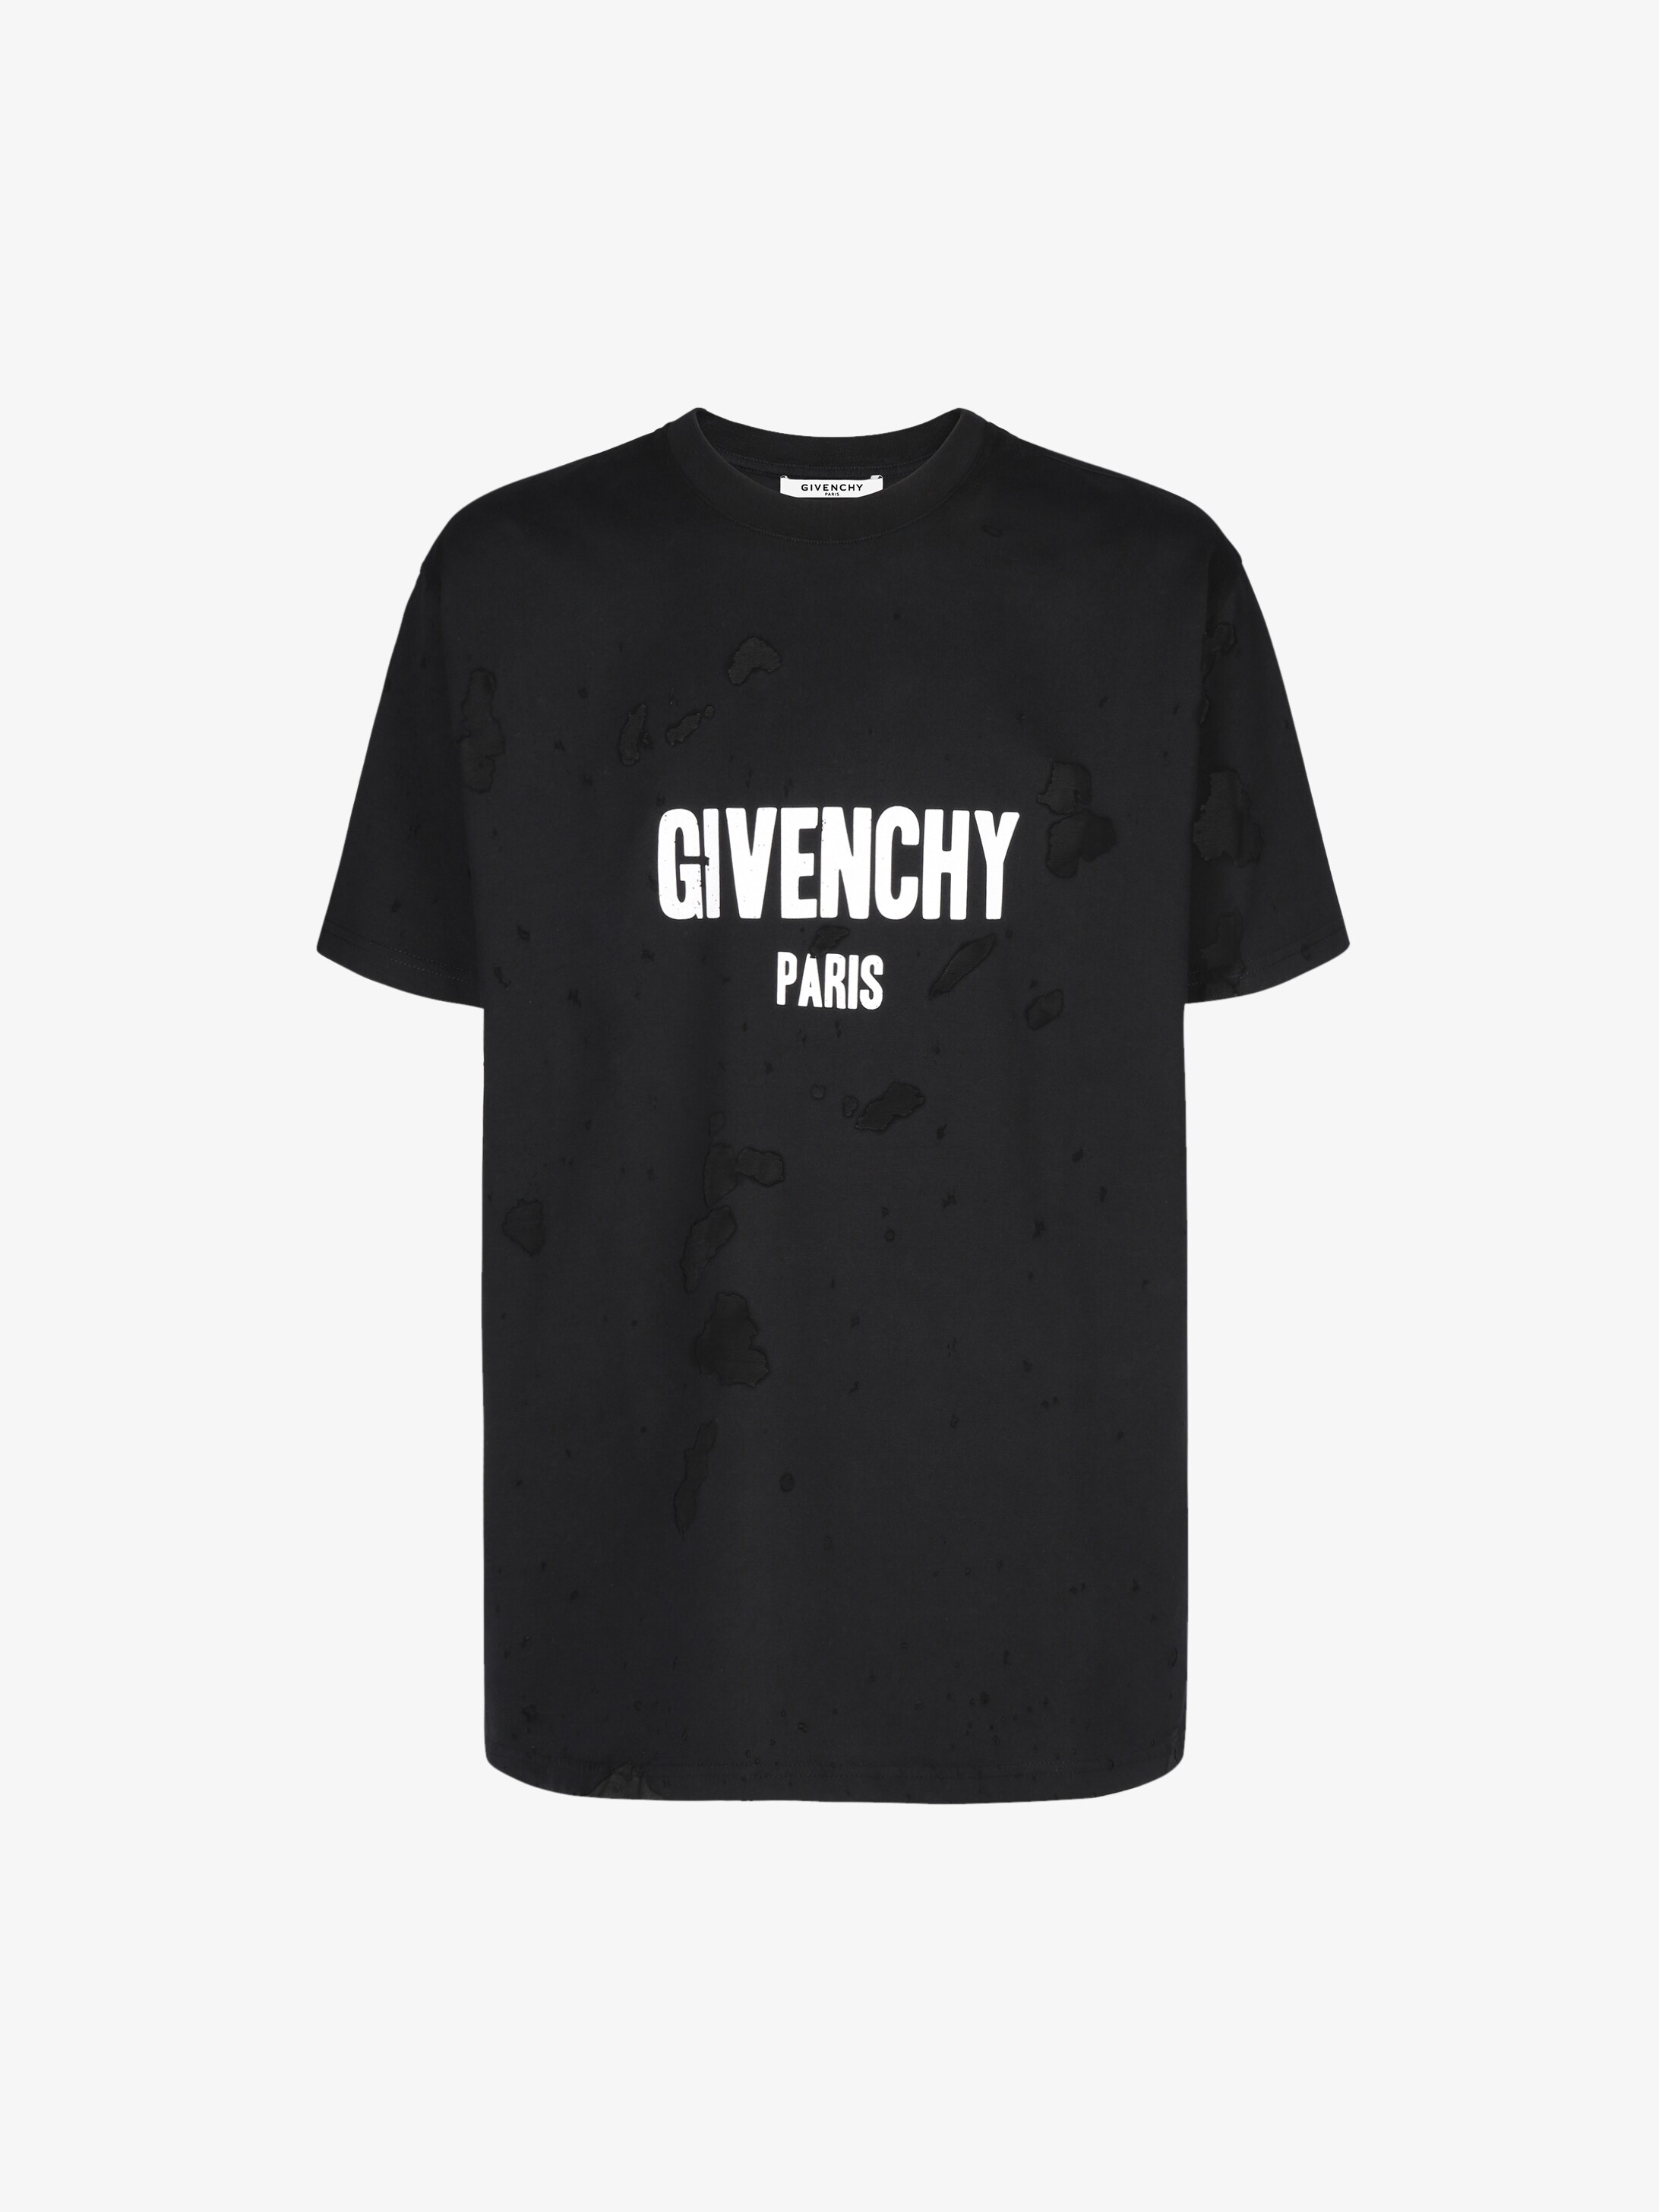 Givenchy PARIS destroyed oversized t-shirt | GIVENCHY Paris